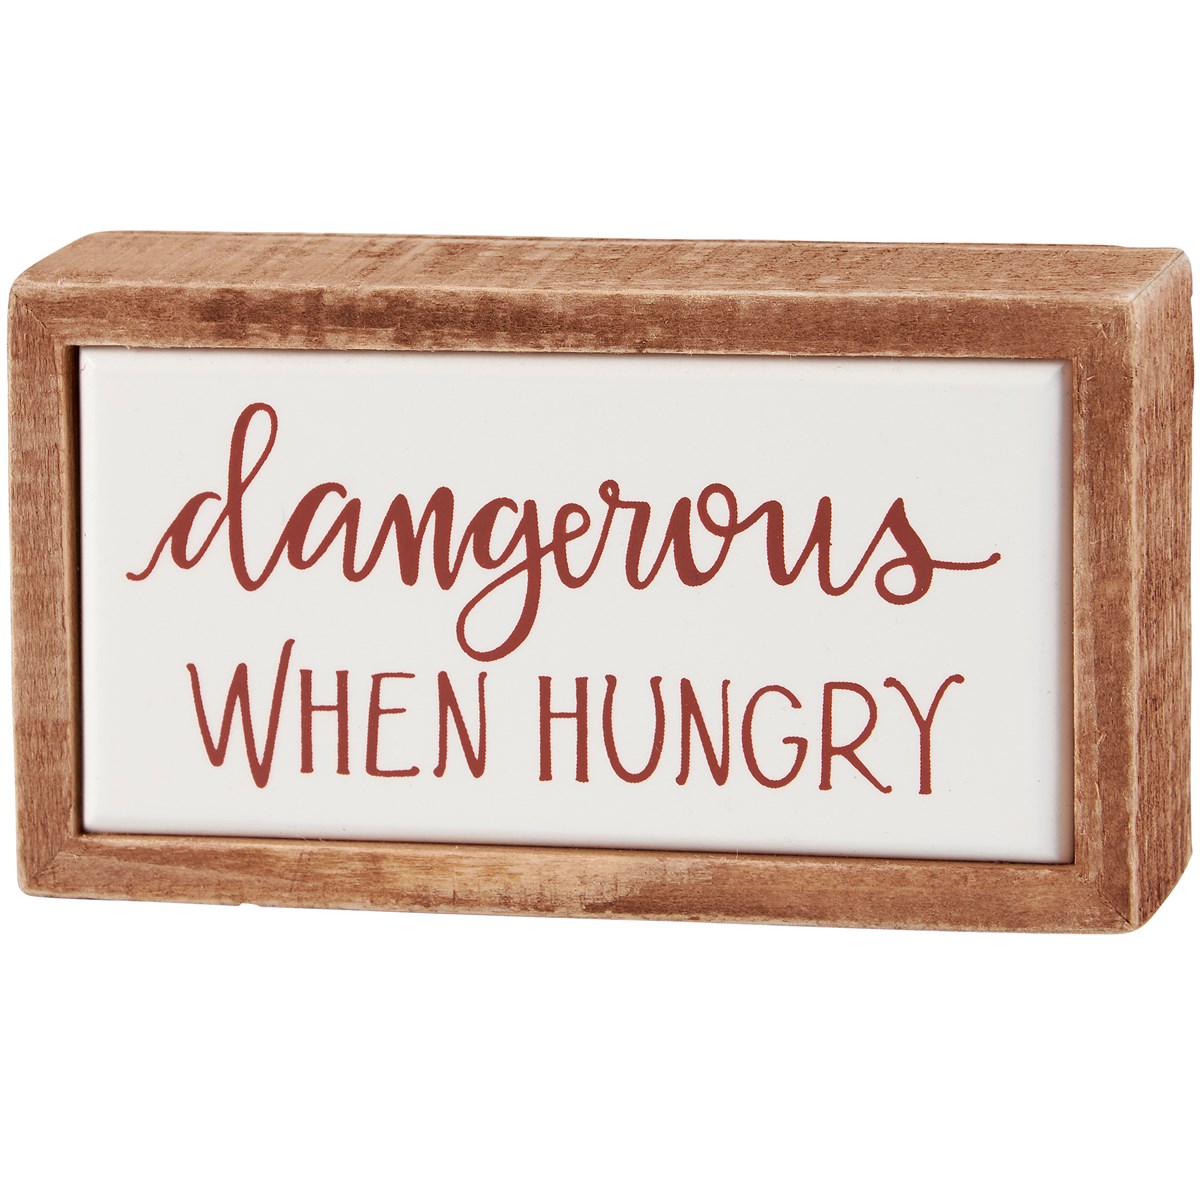 When Hungry Box Sign Mini - Wood